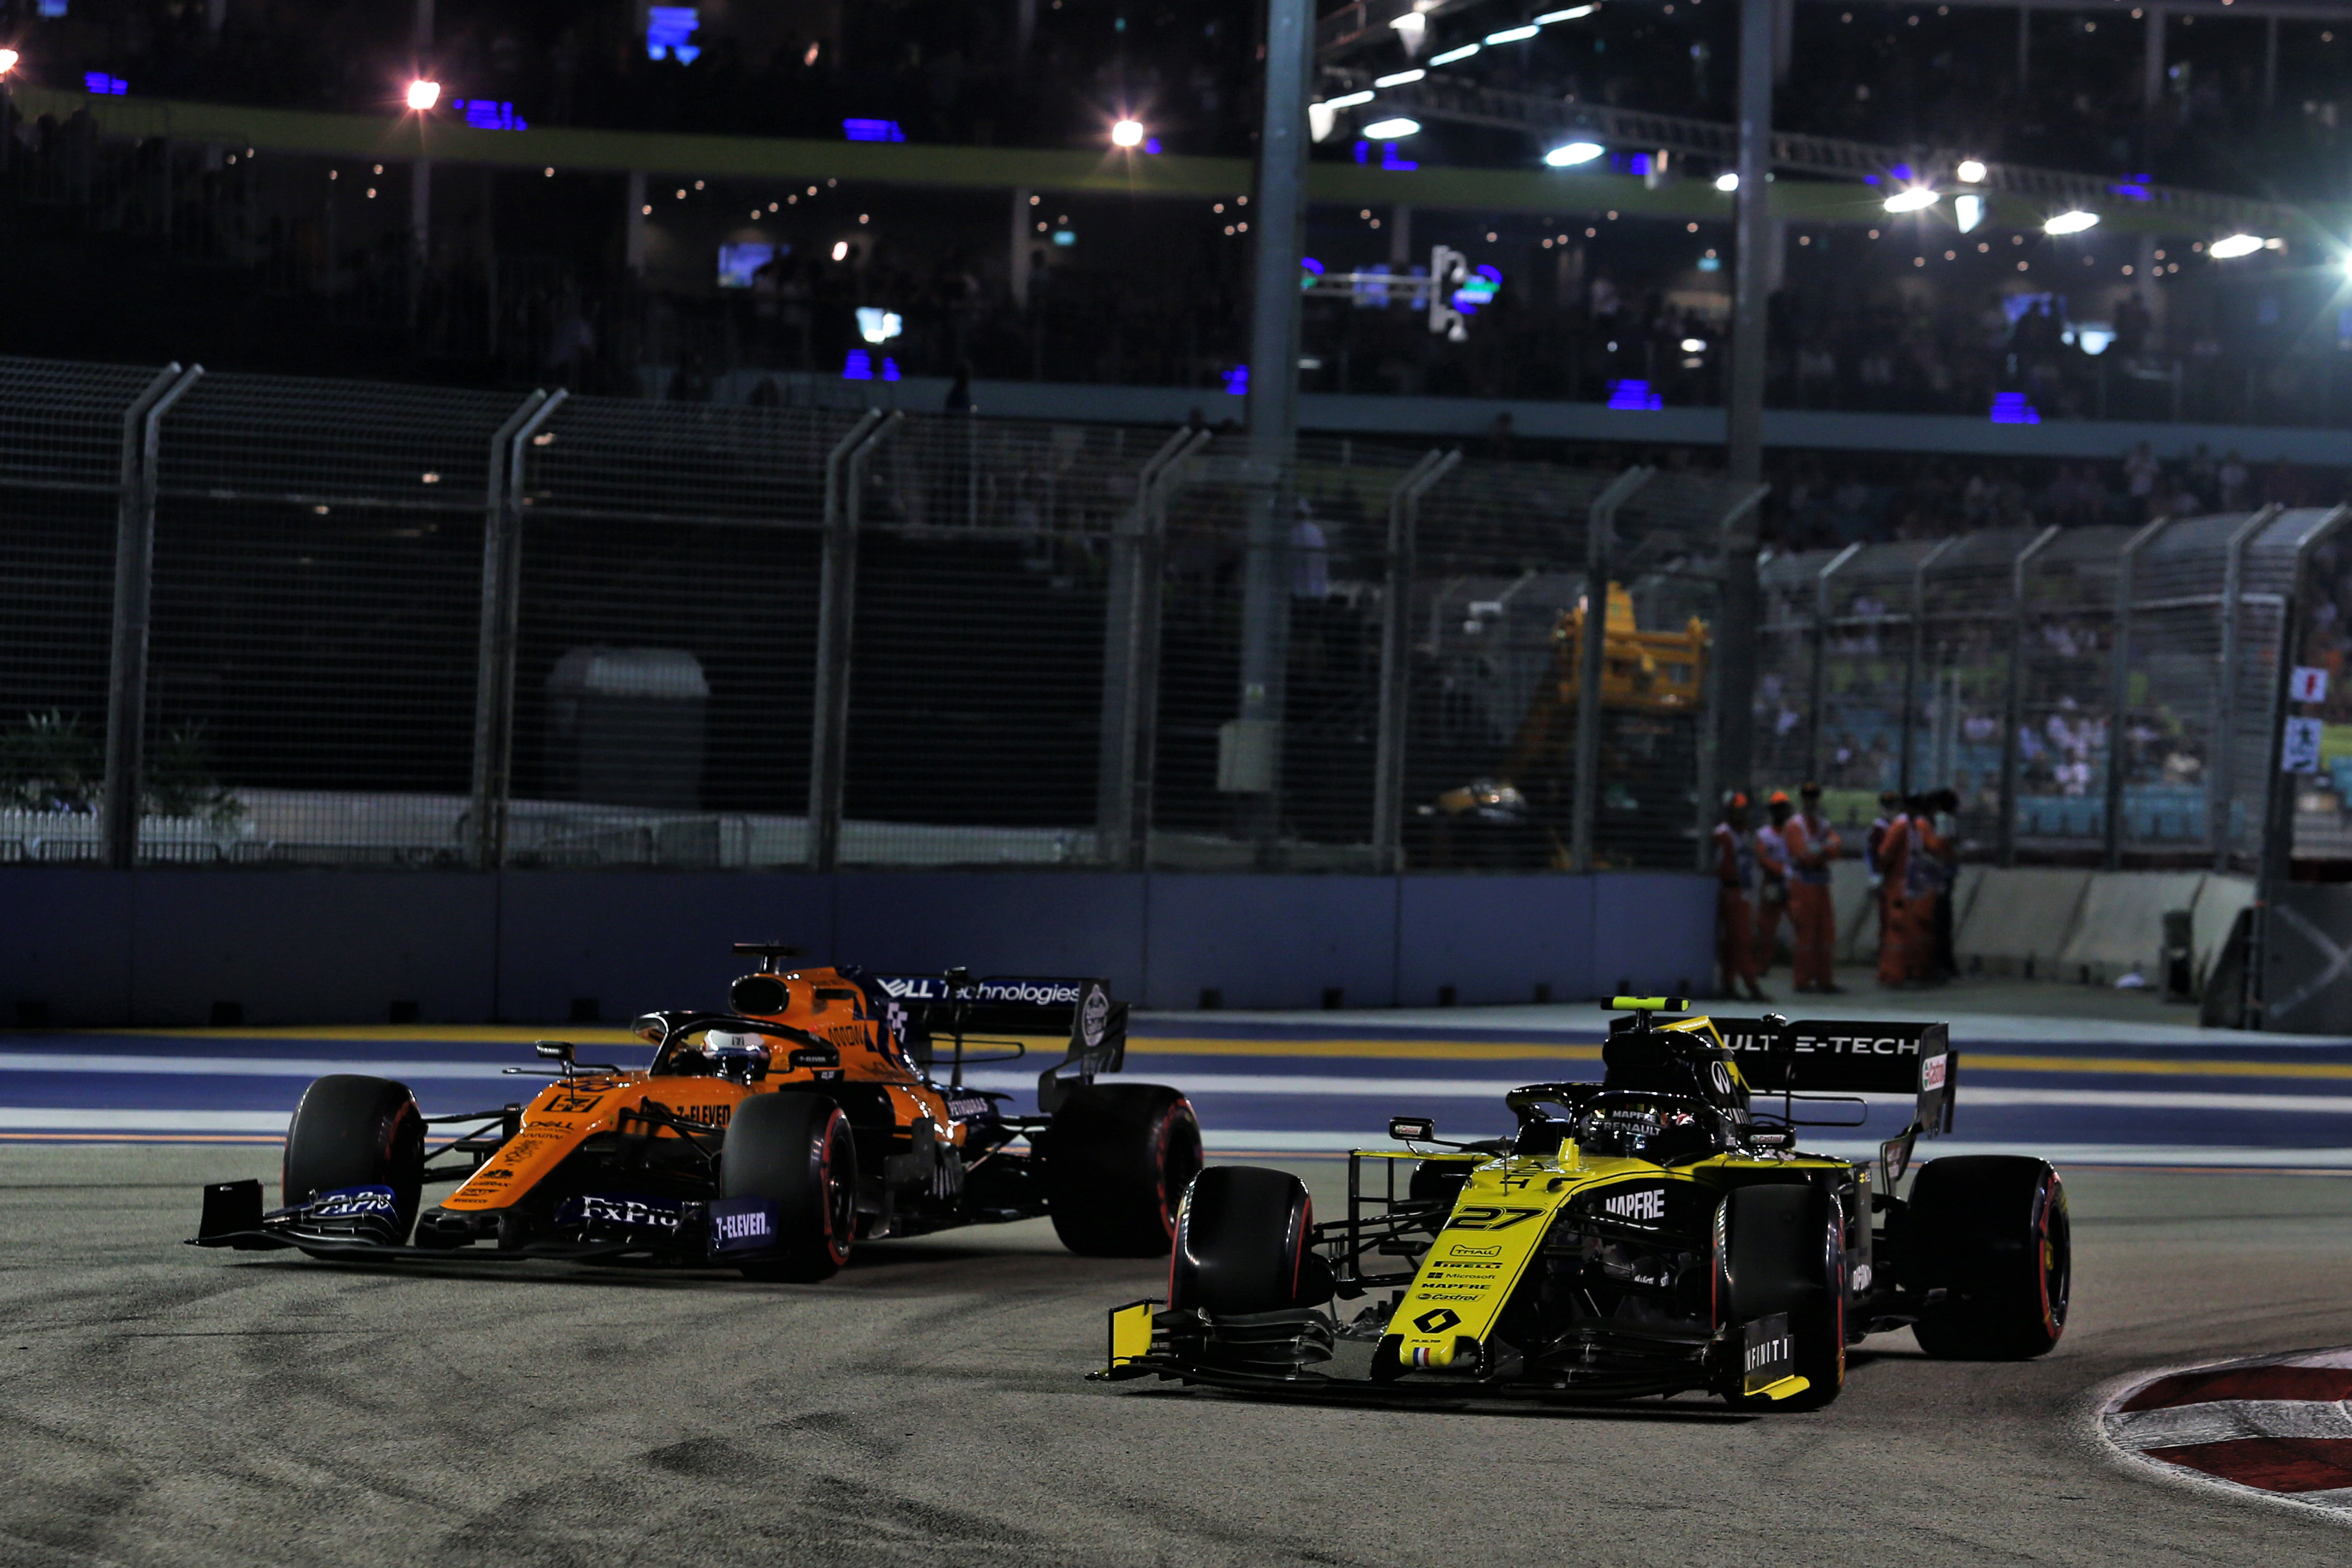 Hulkenberg, Sainz, Renault, McLaren Singapore F1 2019